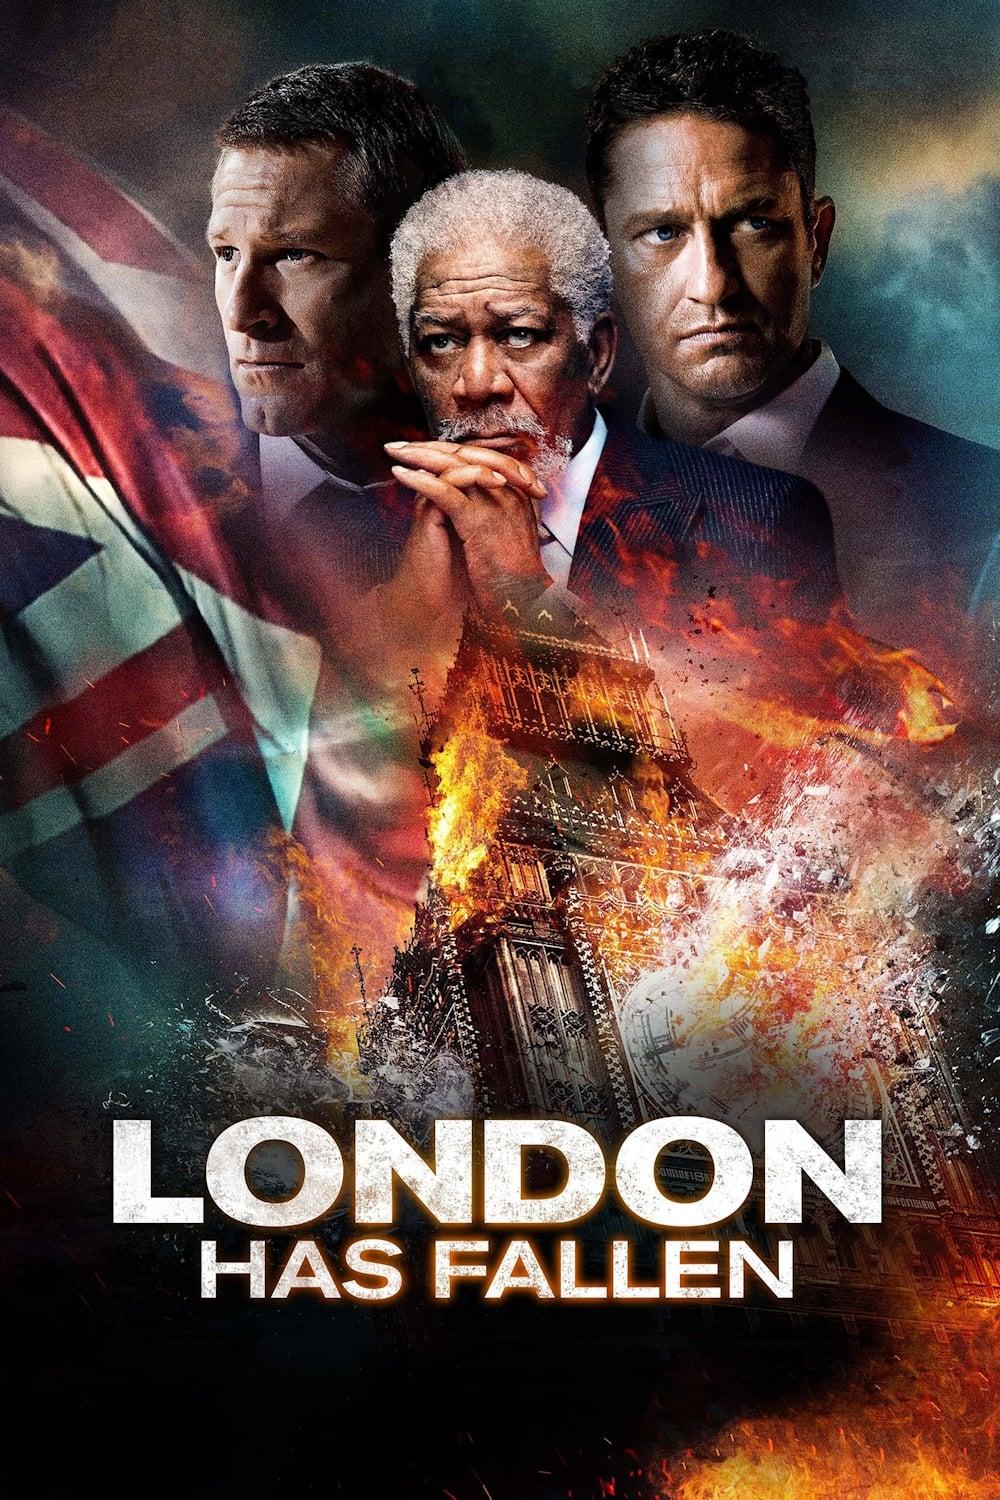 London Has Fallen poster